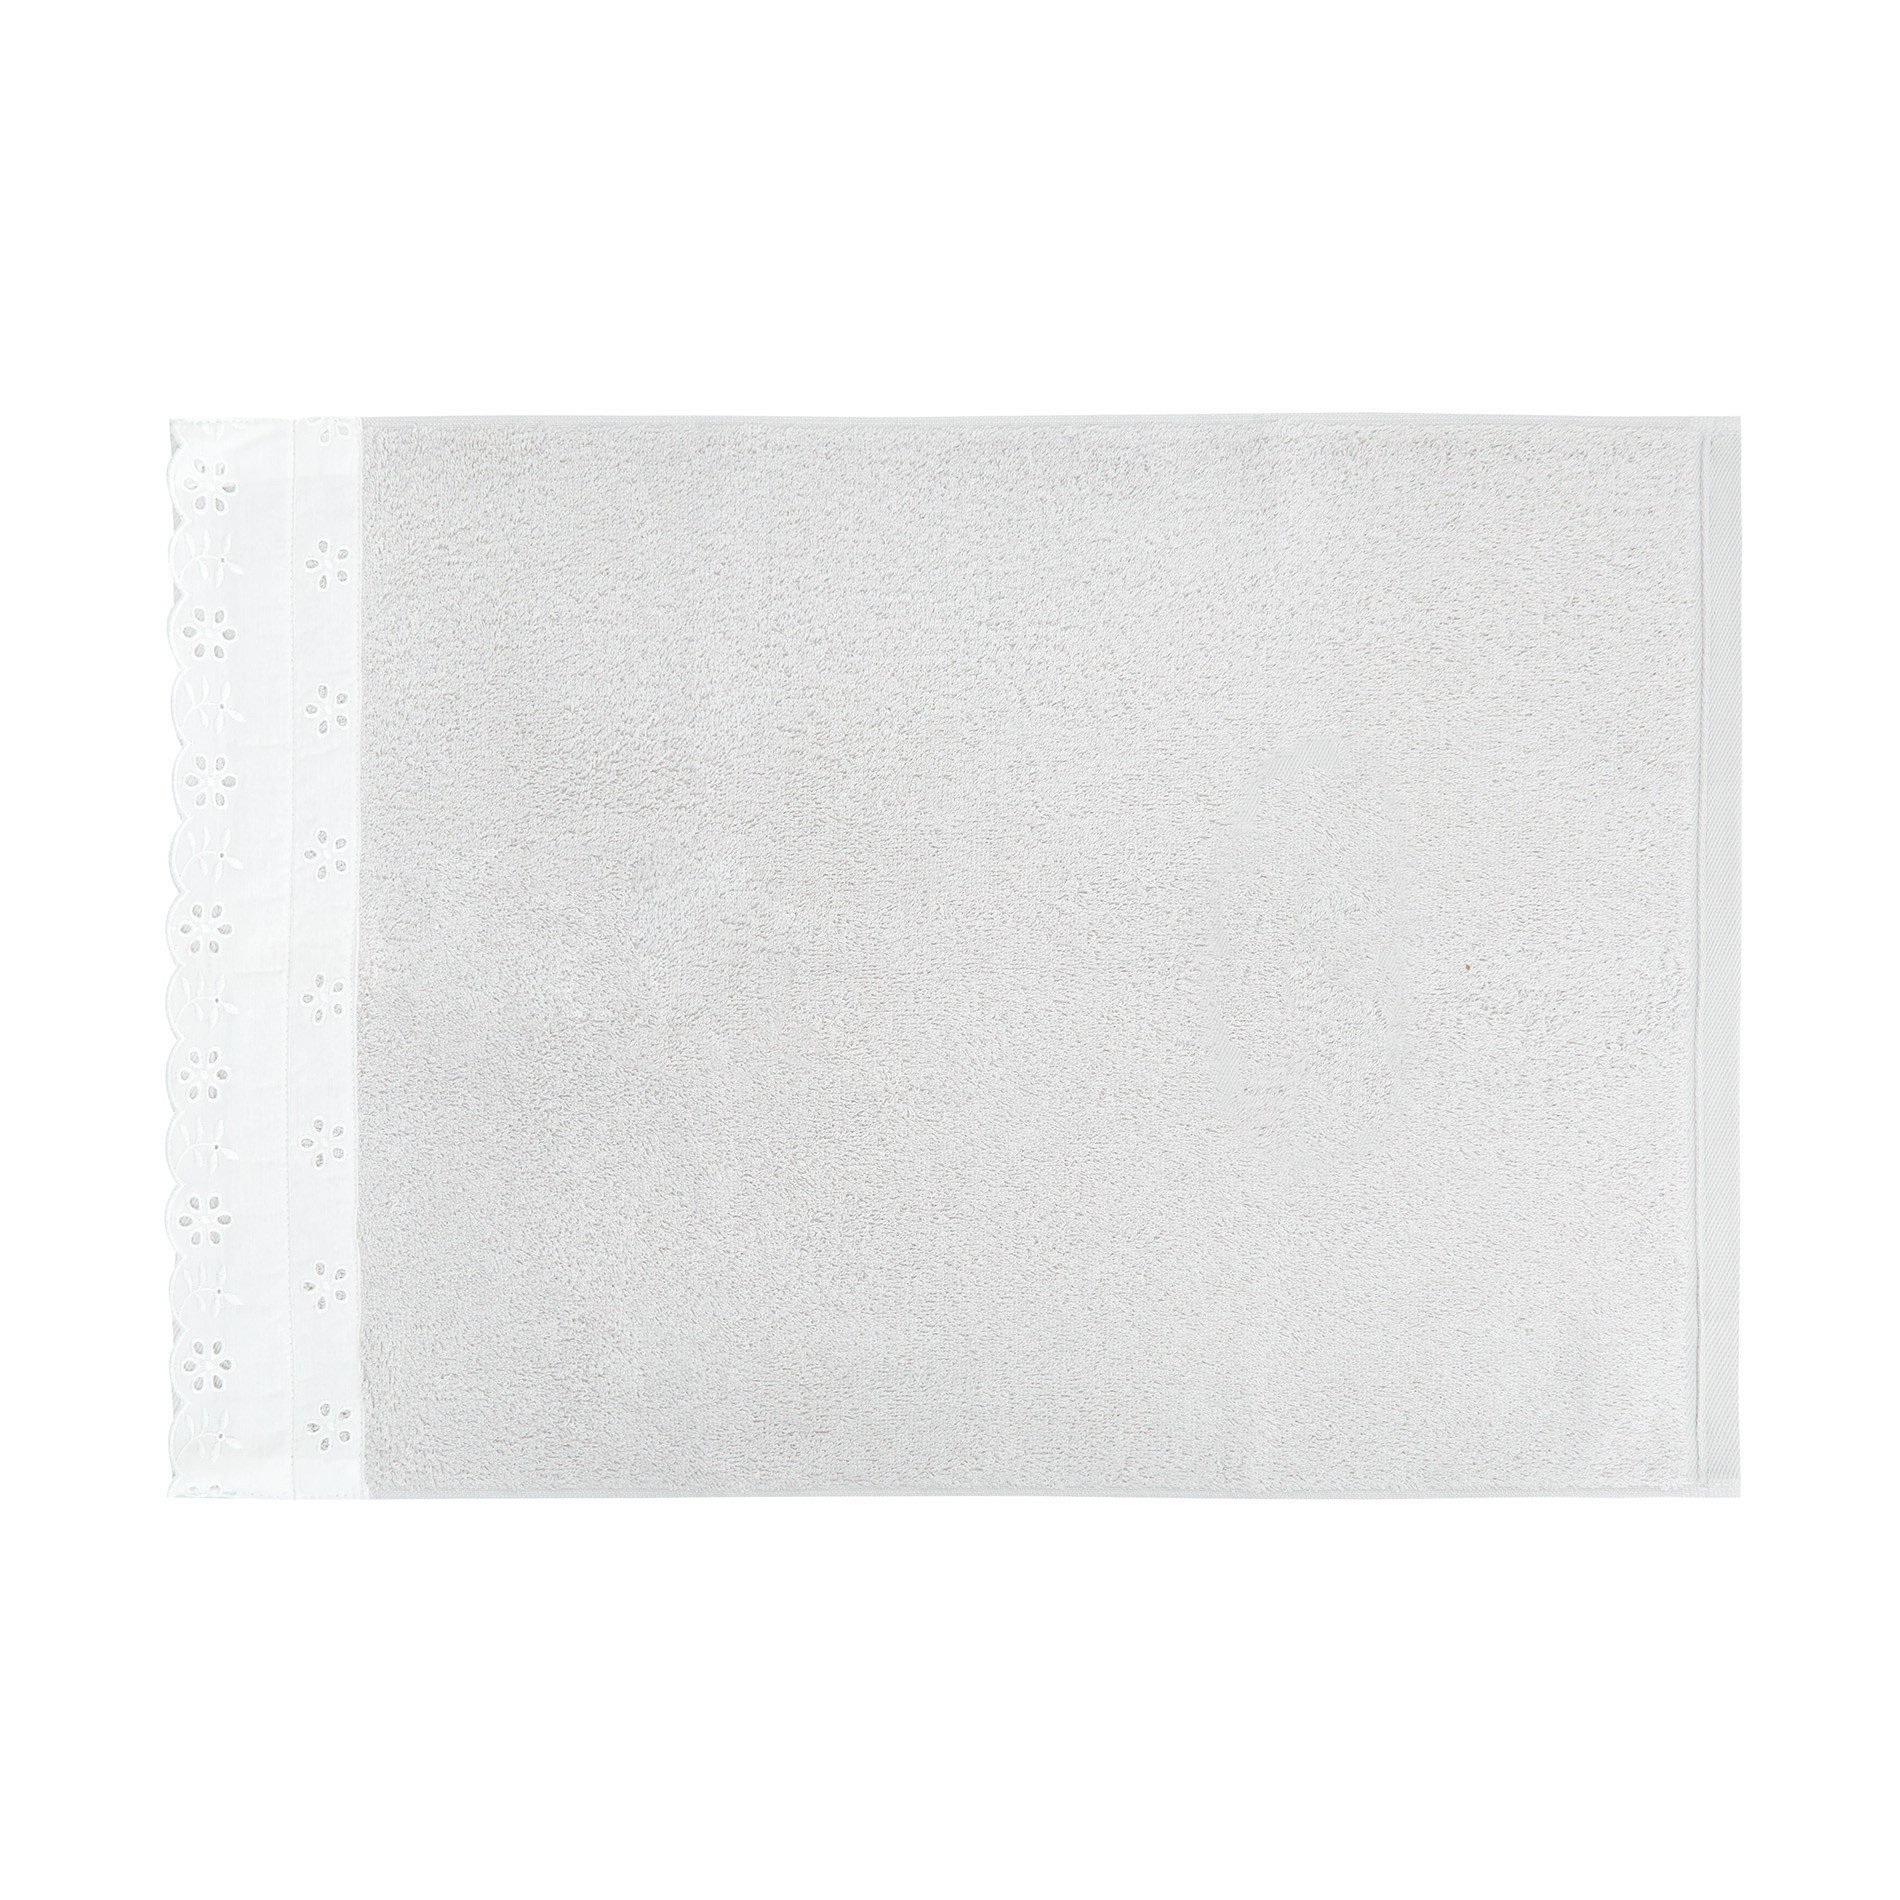 Portofino broderie towel, Light Grey, large image number 2